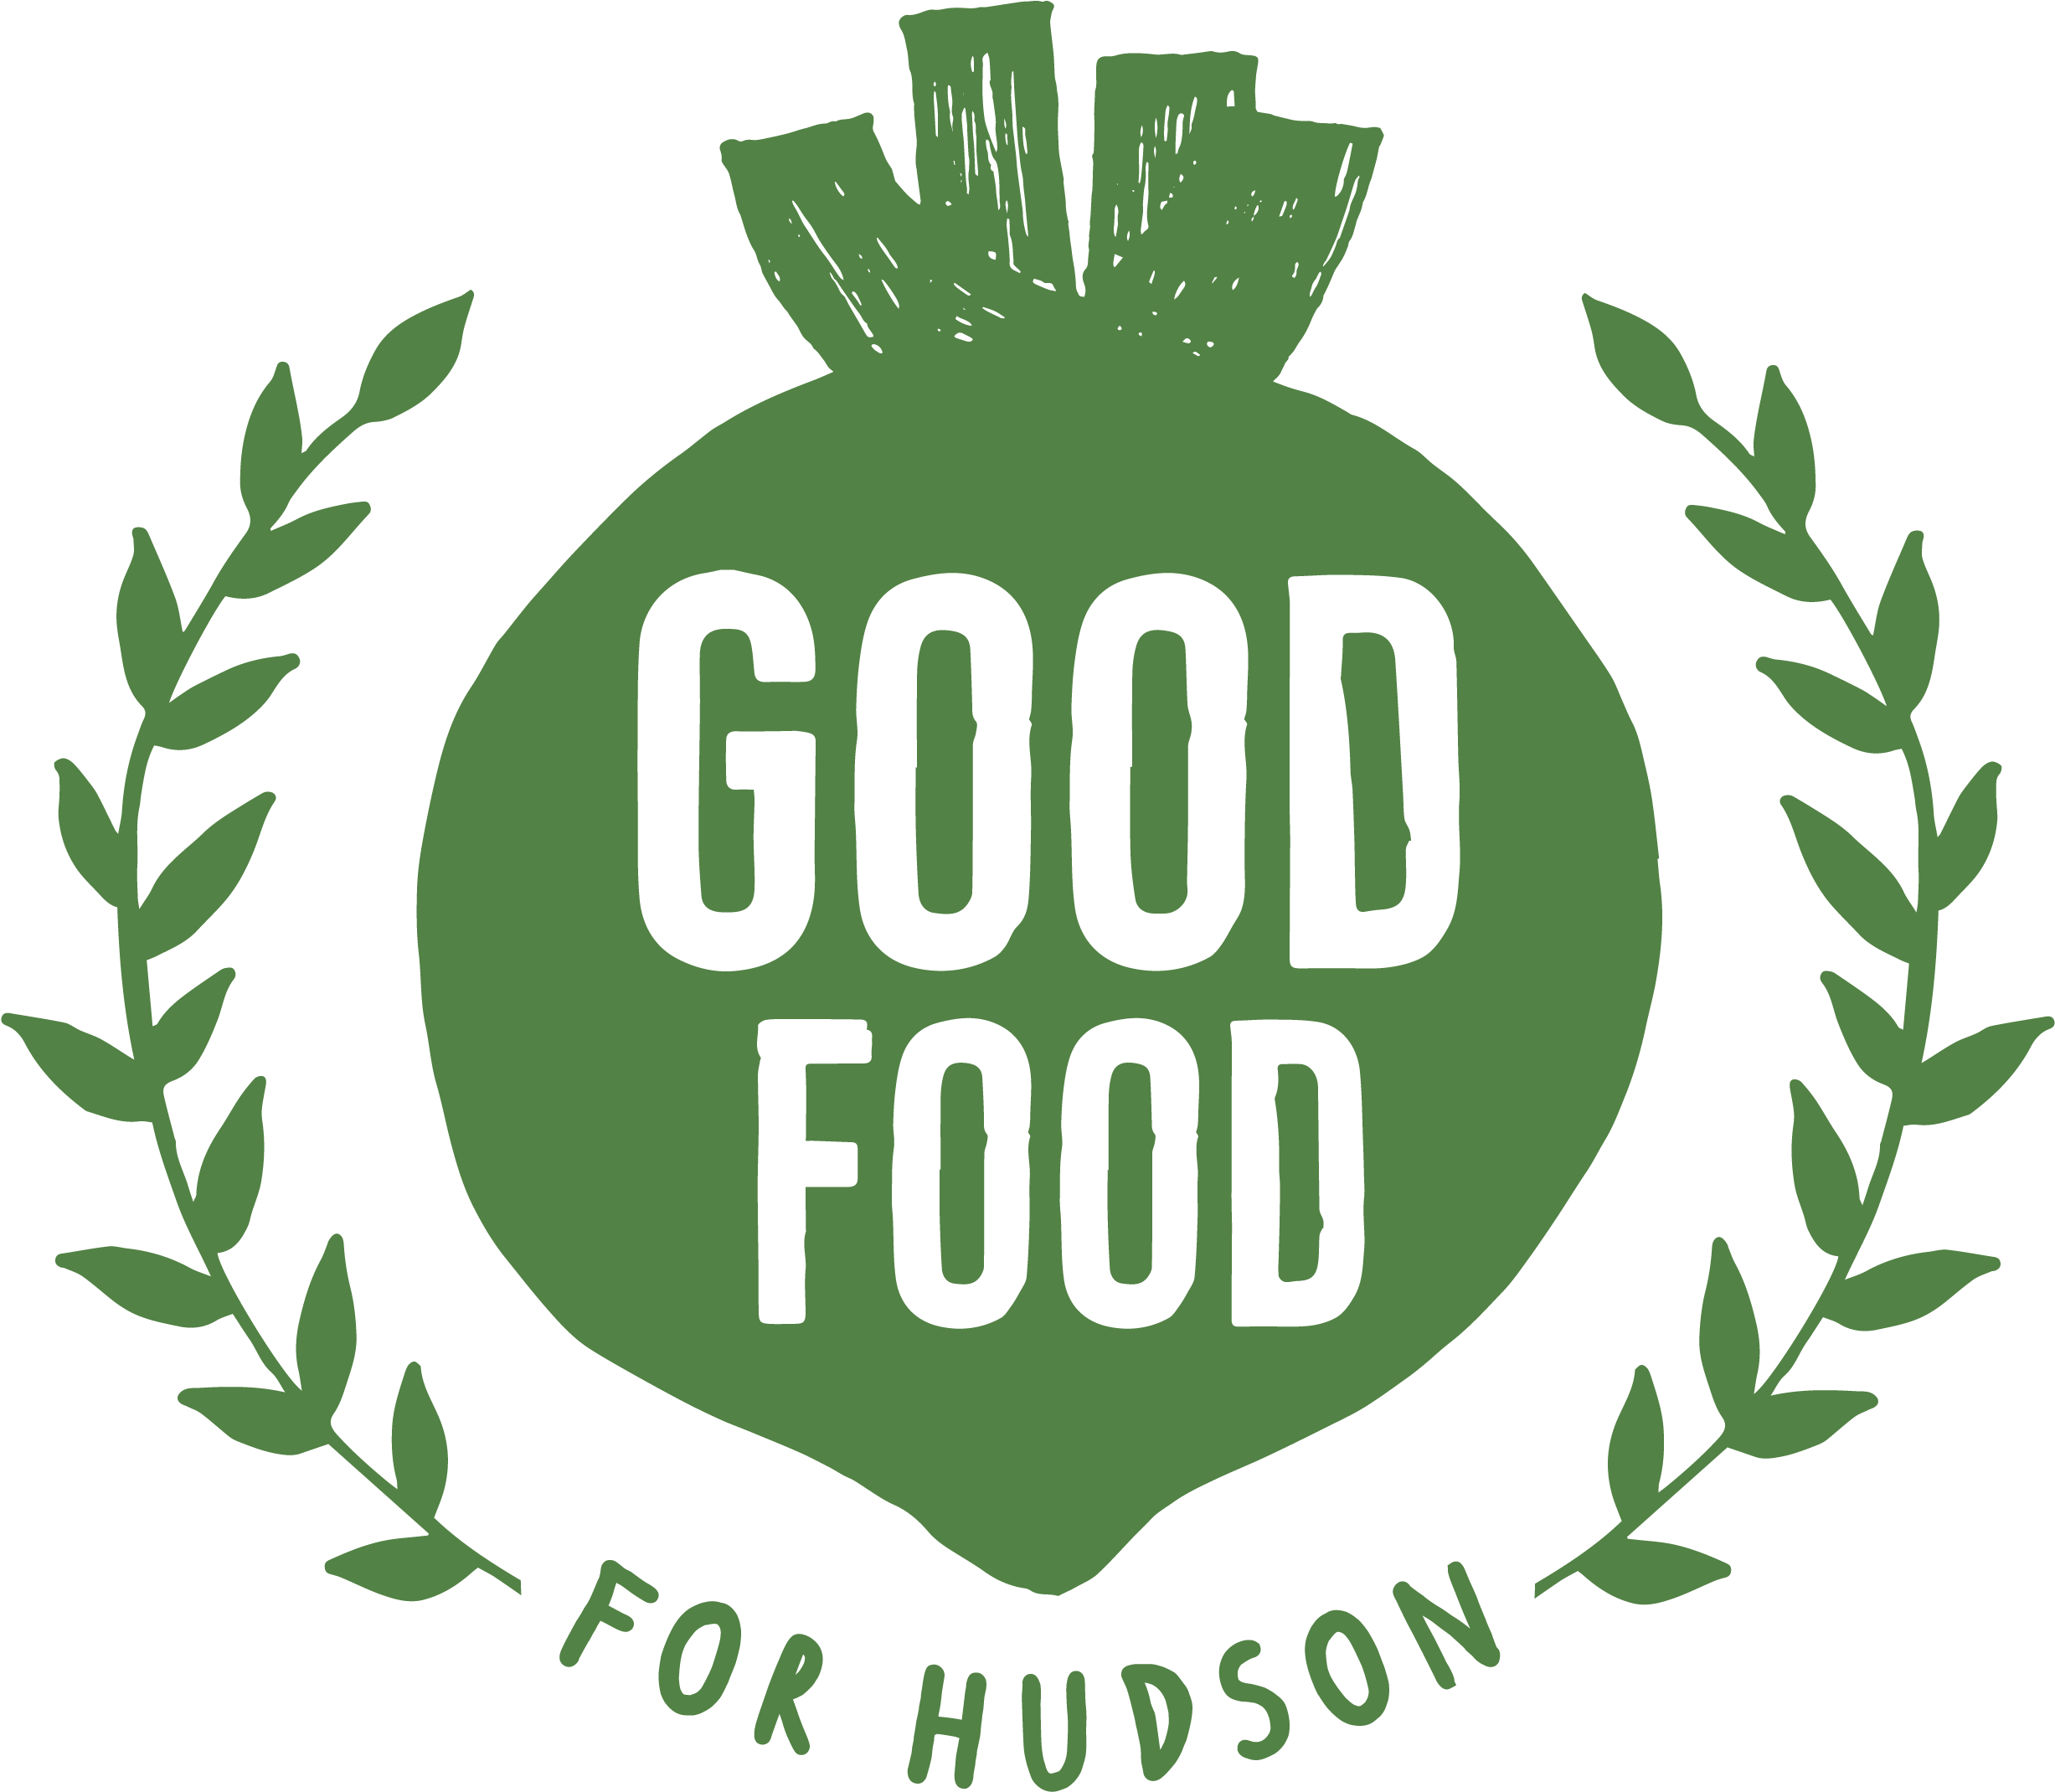 Логотип food. Best food логотип. The best foods лого. Good food надпись. Логотип фуд